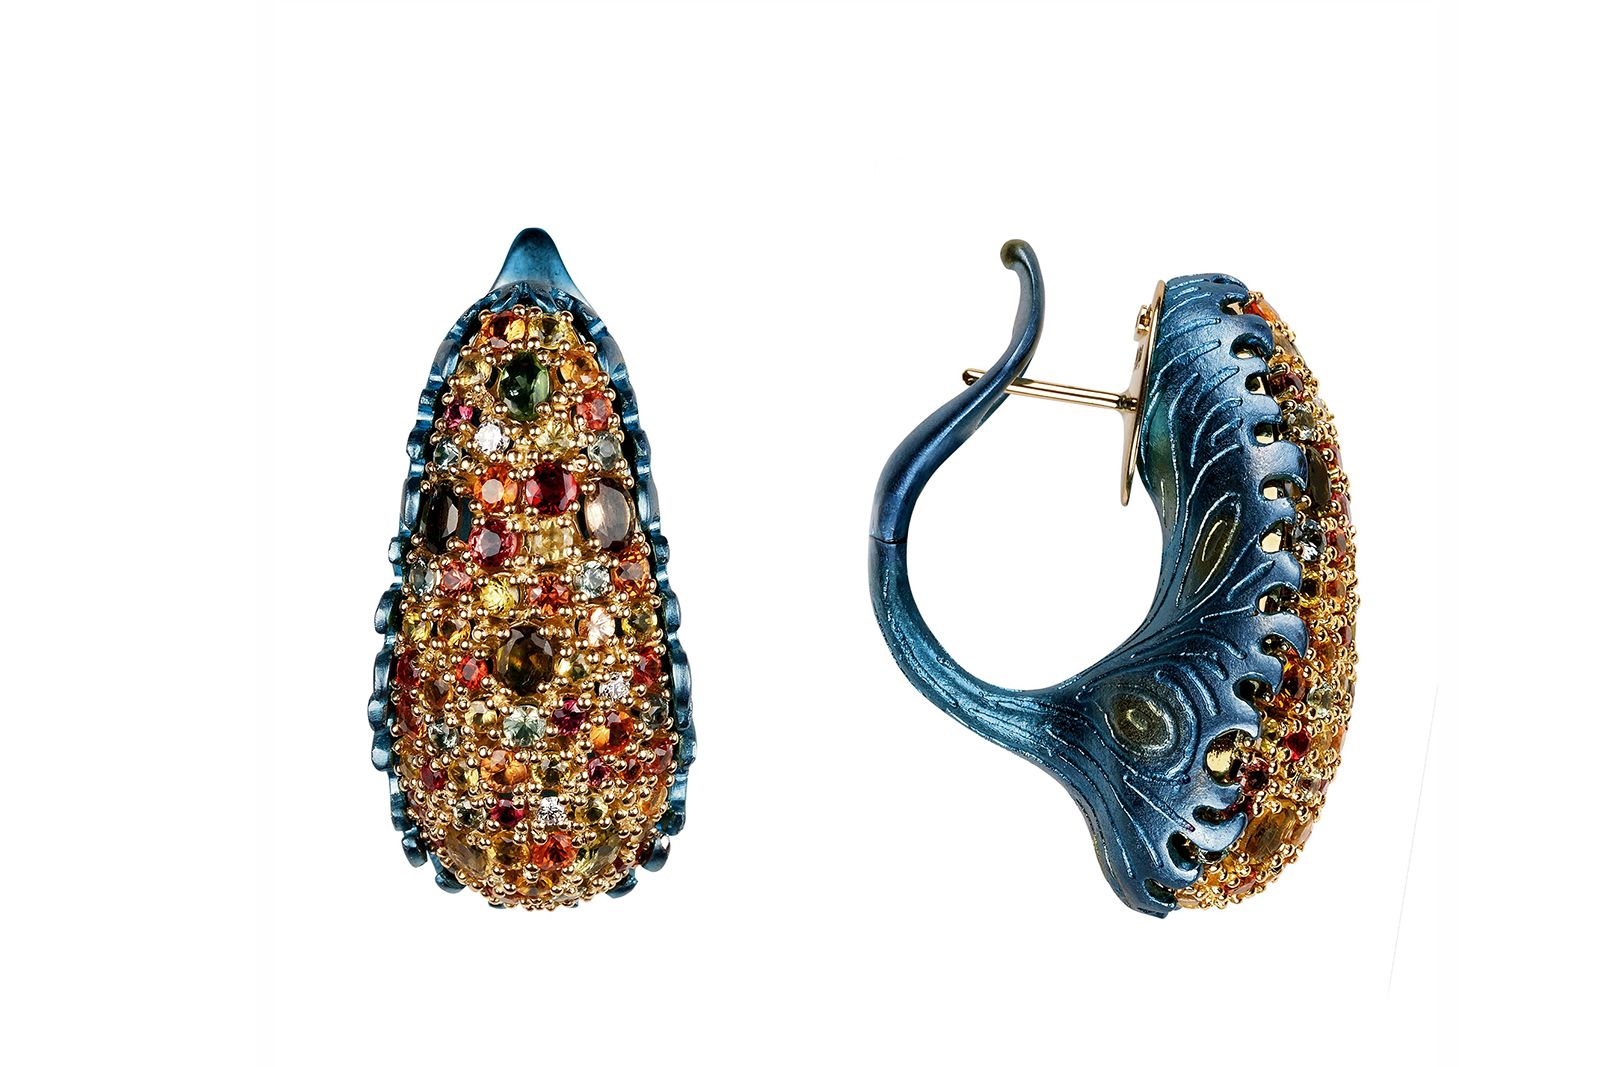 Blue Tiger Clae earrings by Jose Marin